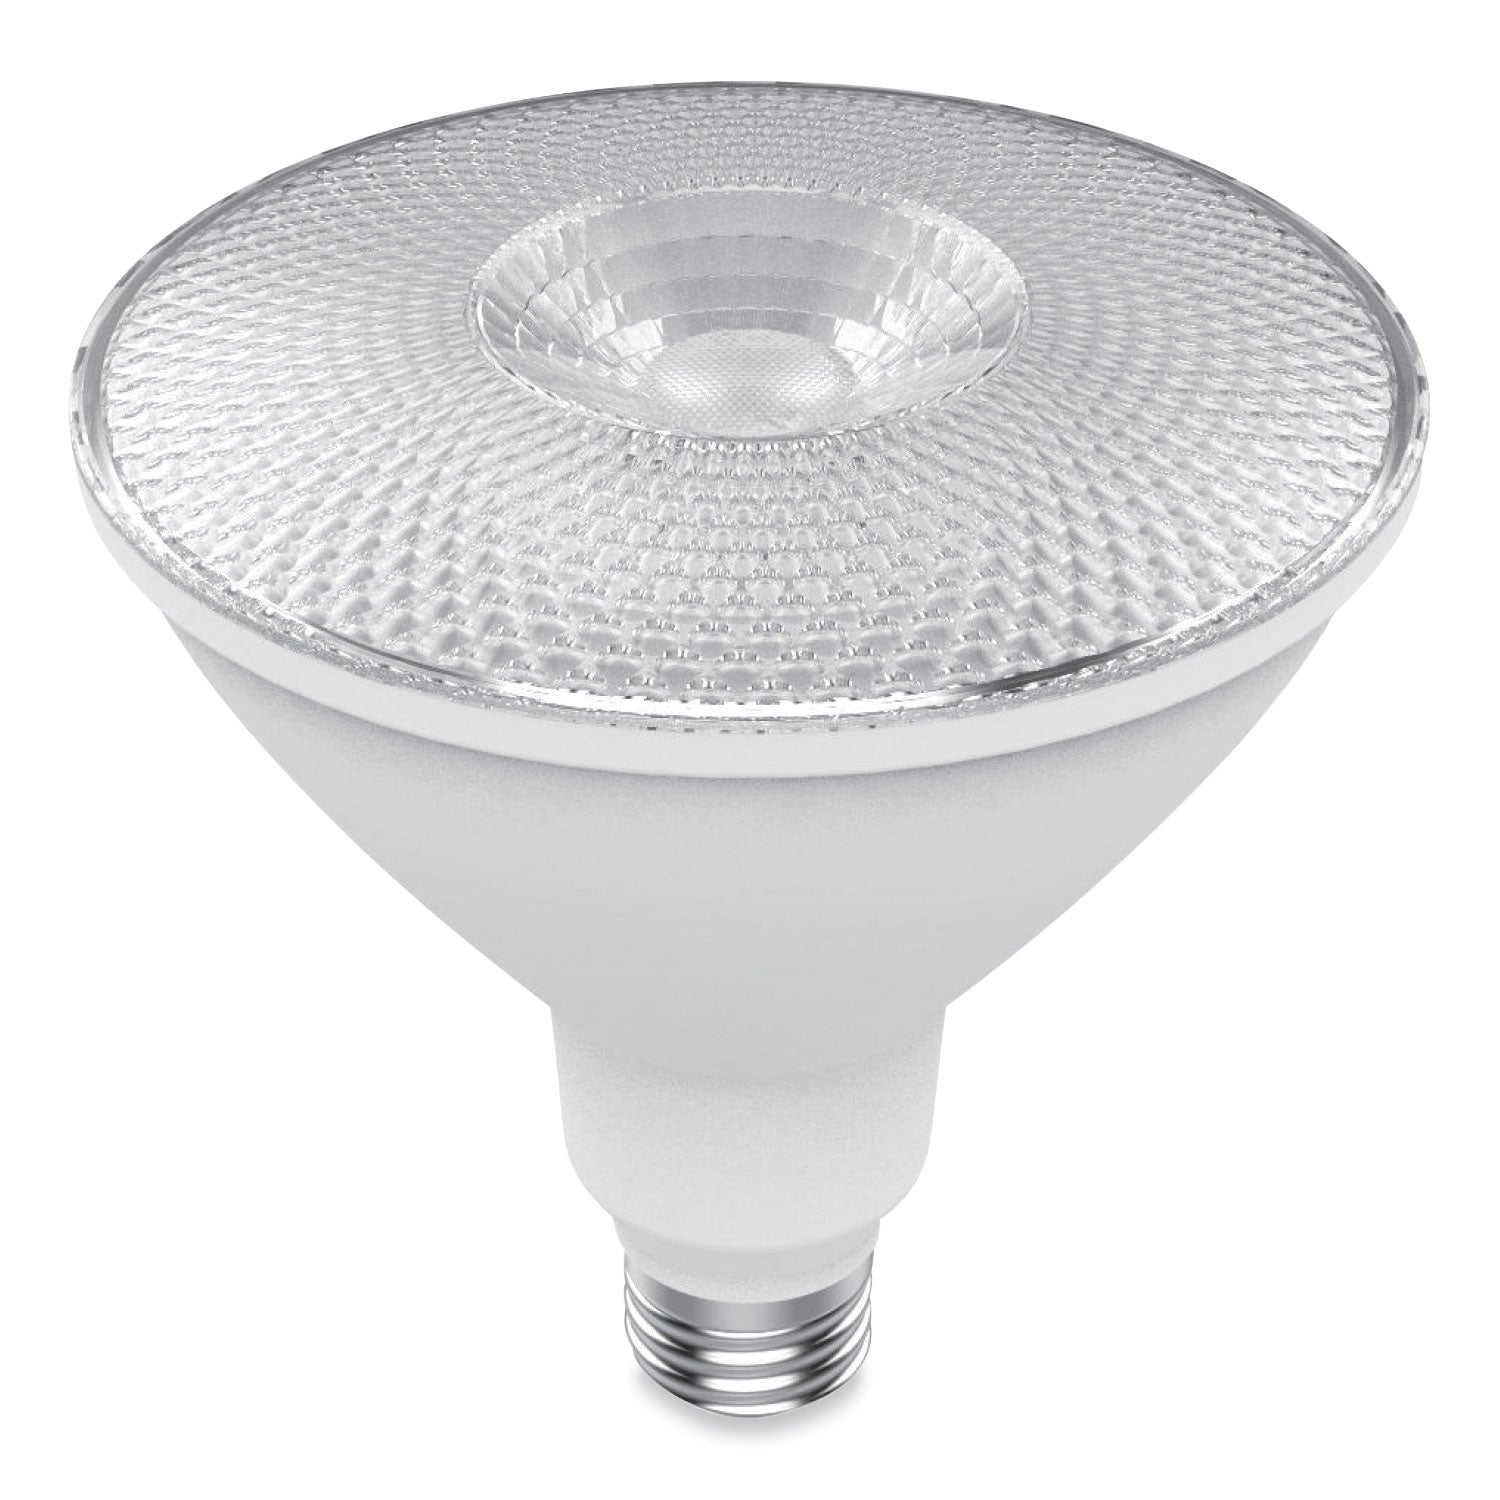 led-par38-non-dimmable-outdoor-flood-light-bulb-15-w-bright-white-2-pack_gel93129298 - 2